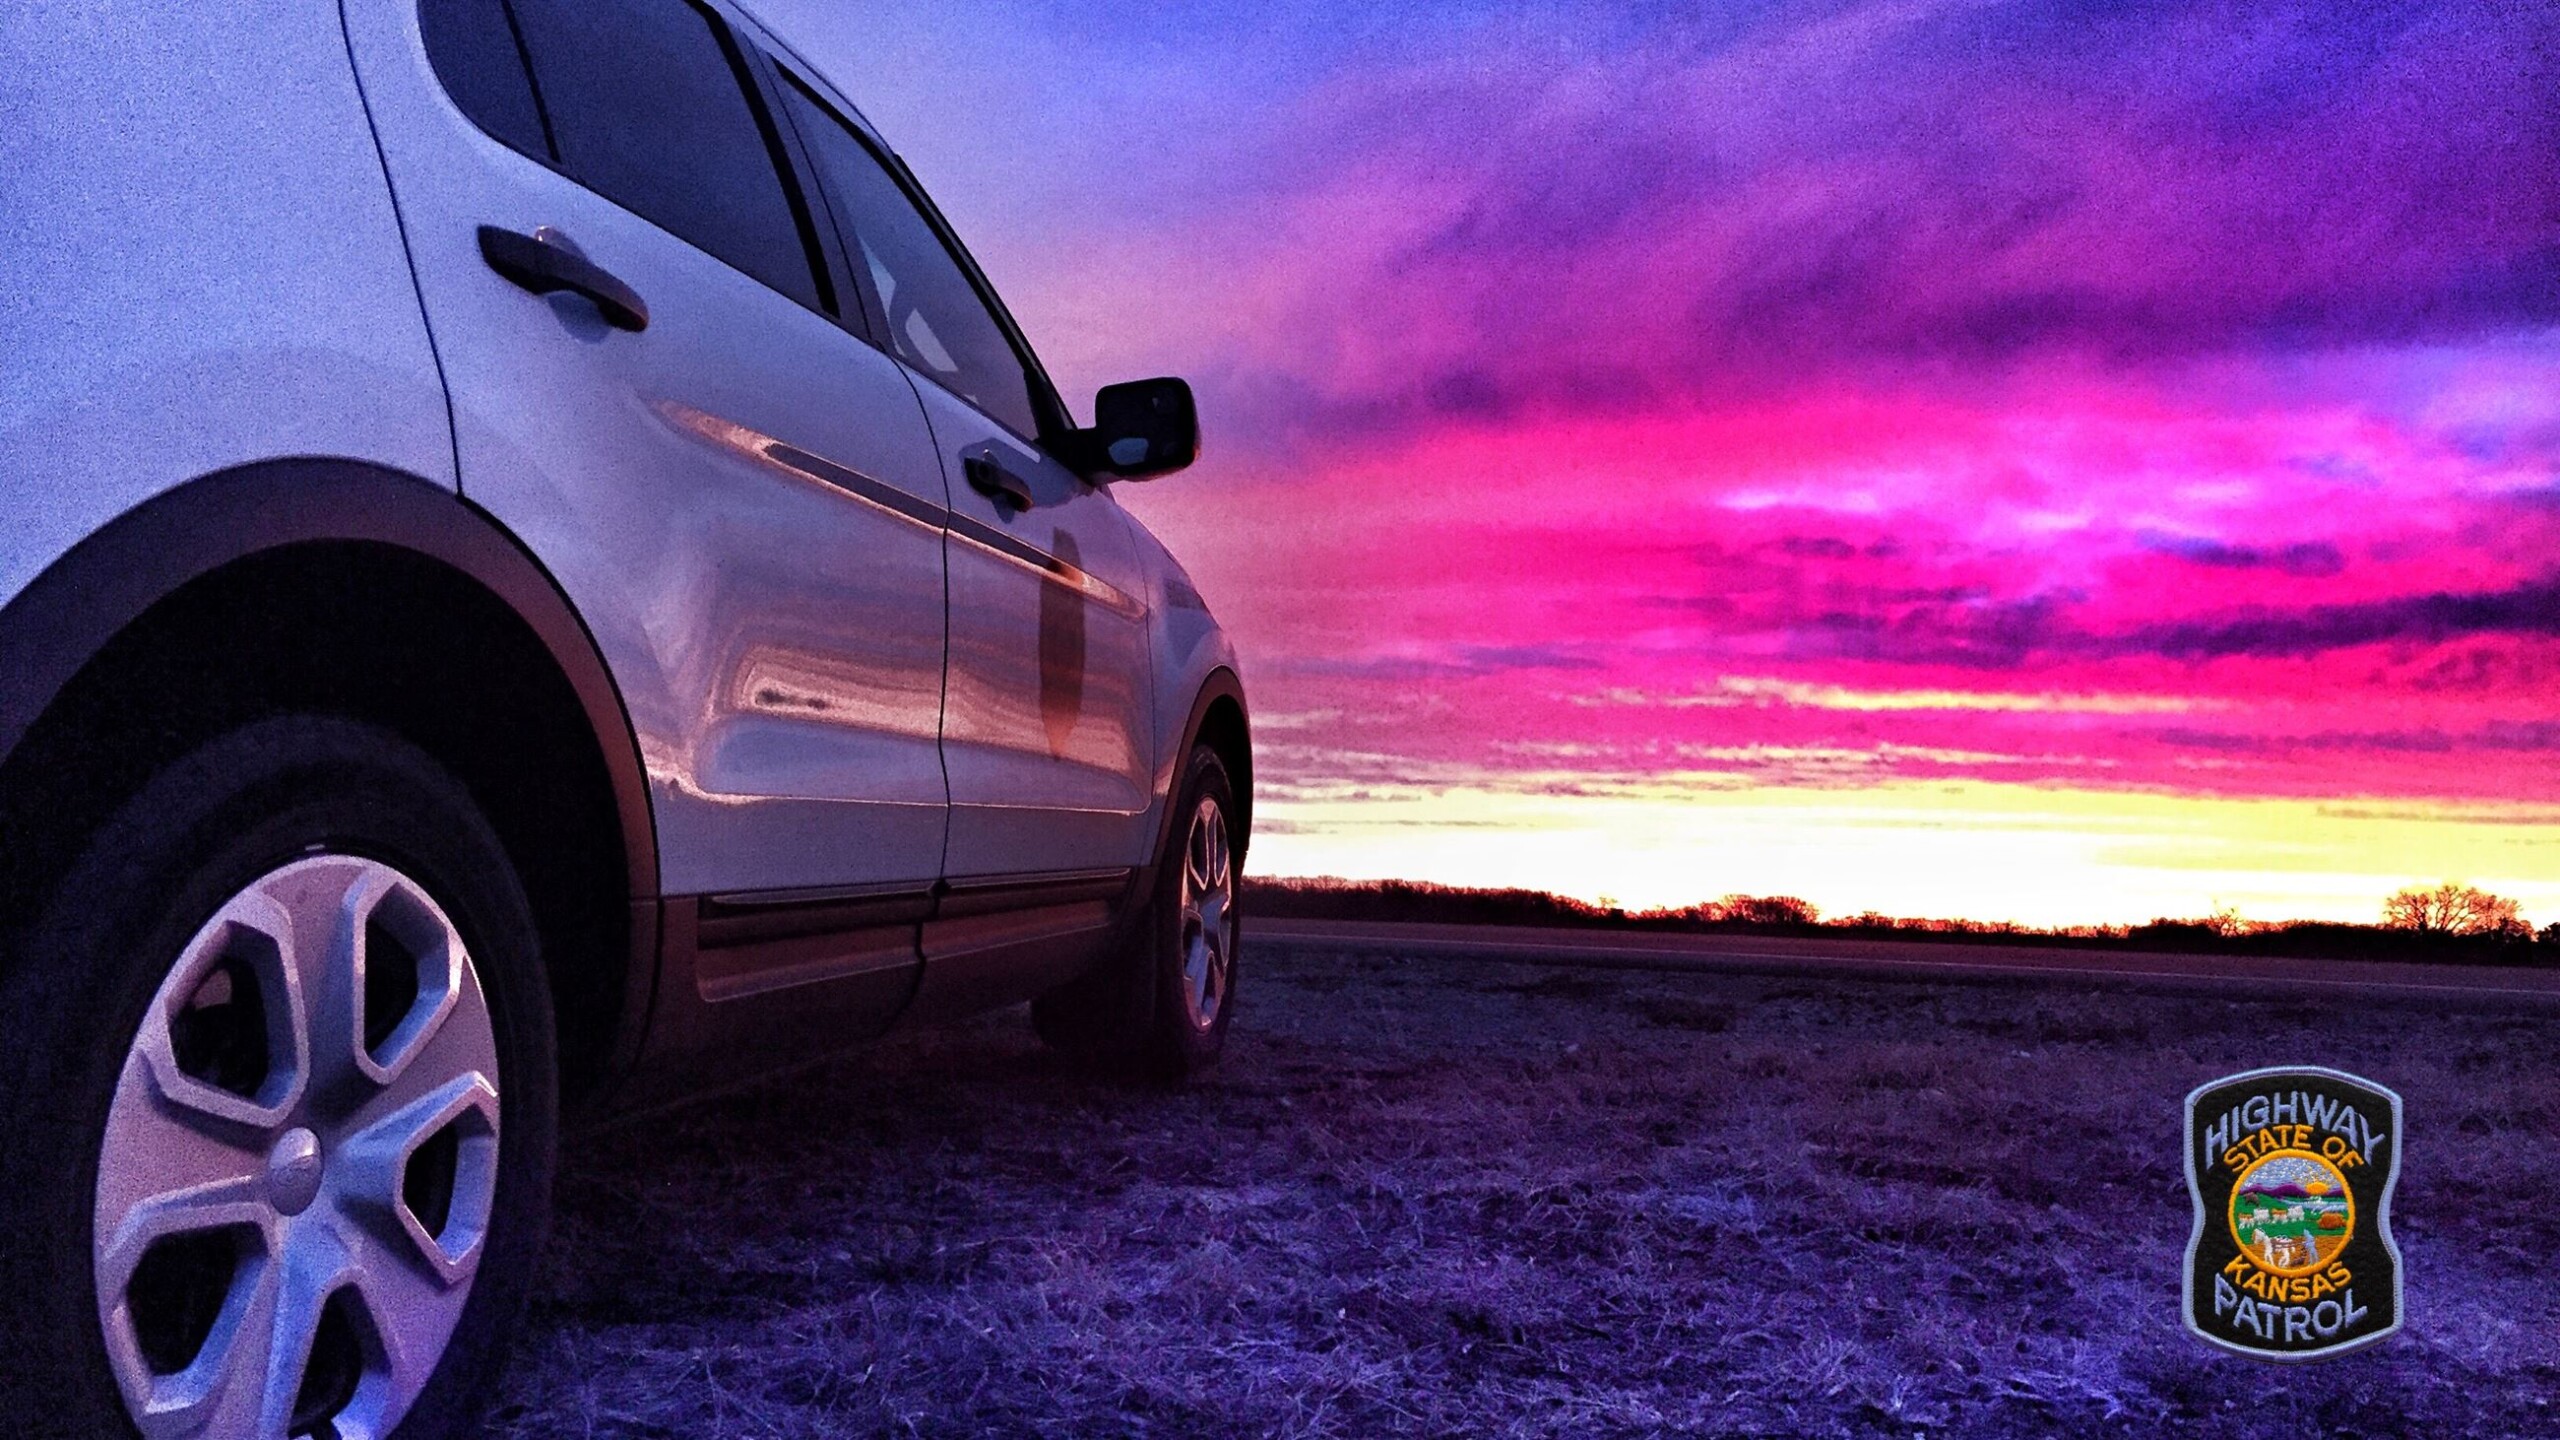 image of Patrol car and vivid sunset